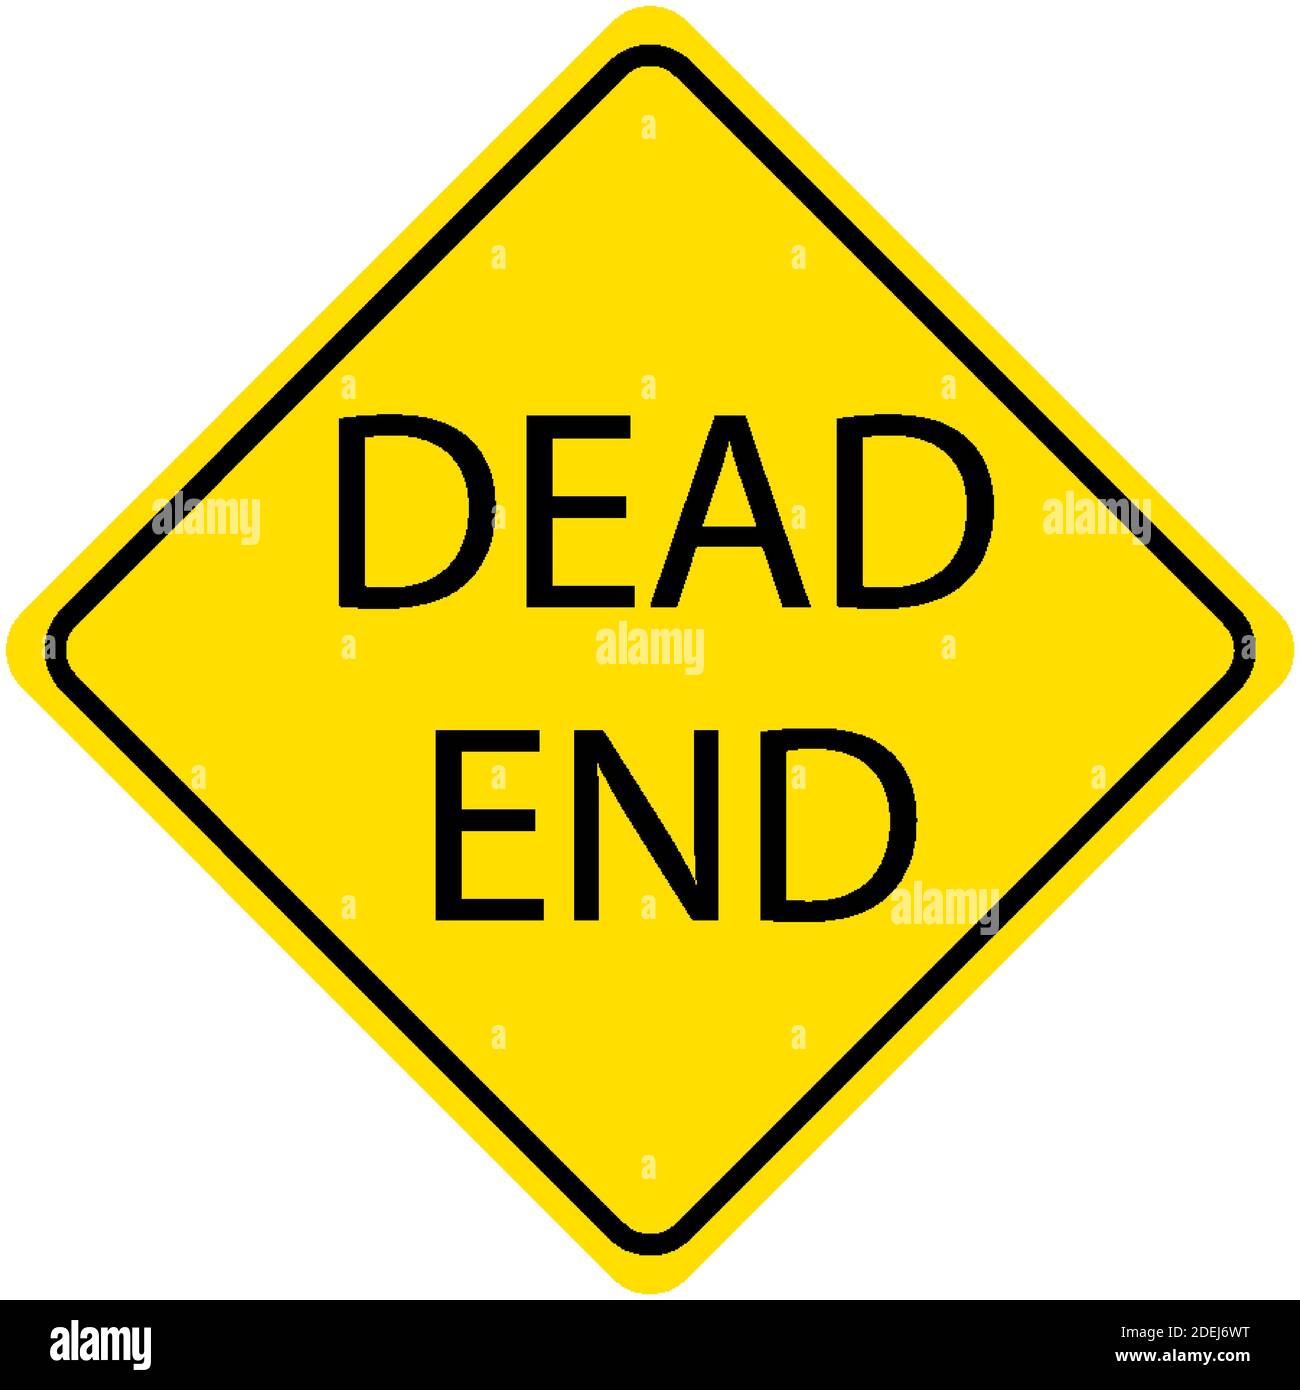 Dead End yellow sign on white backrgound illustration Stock Vector